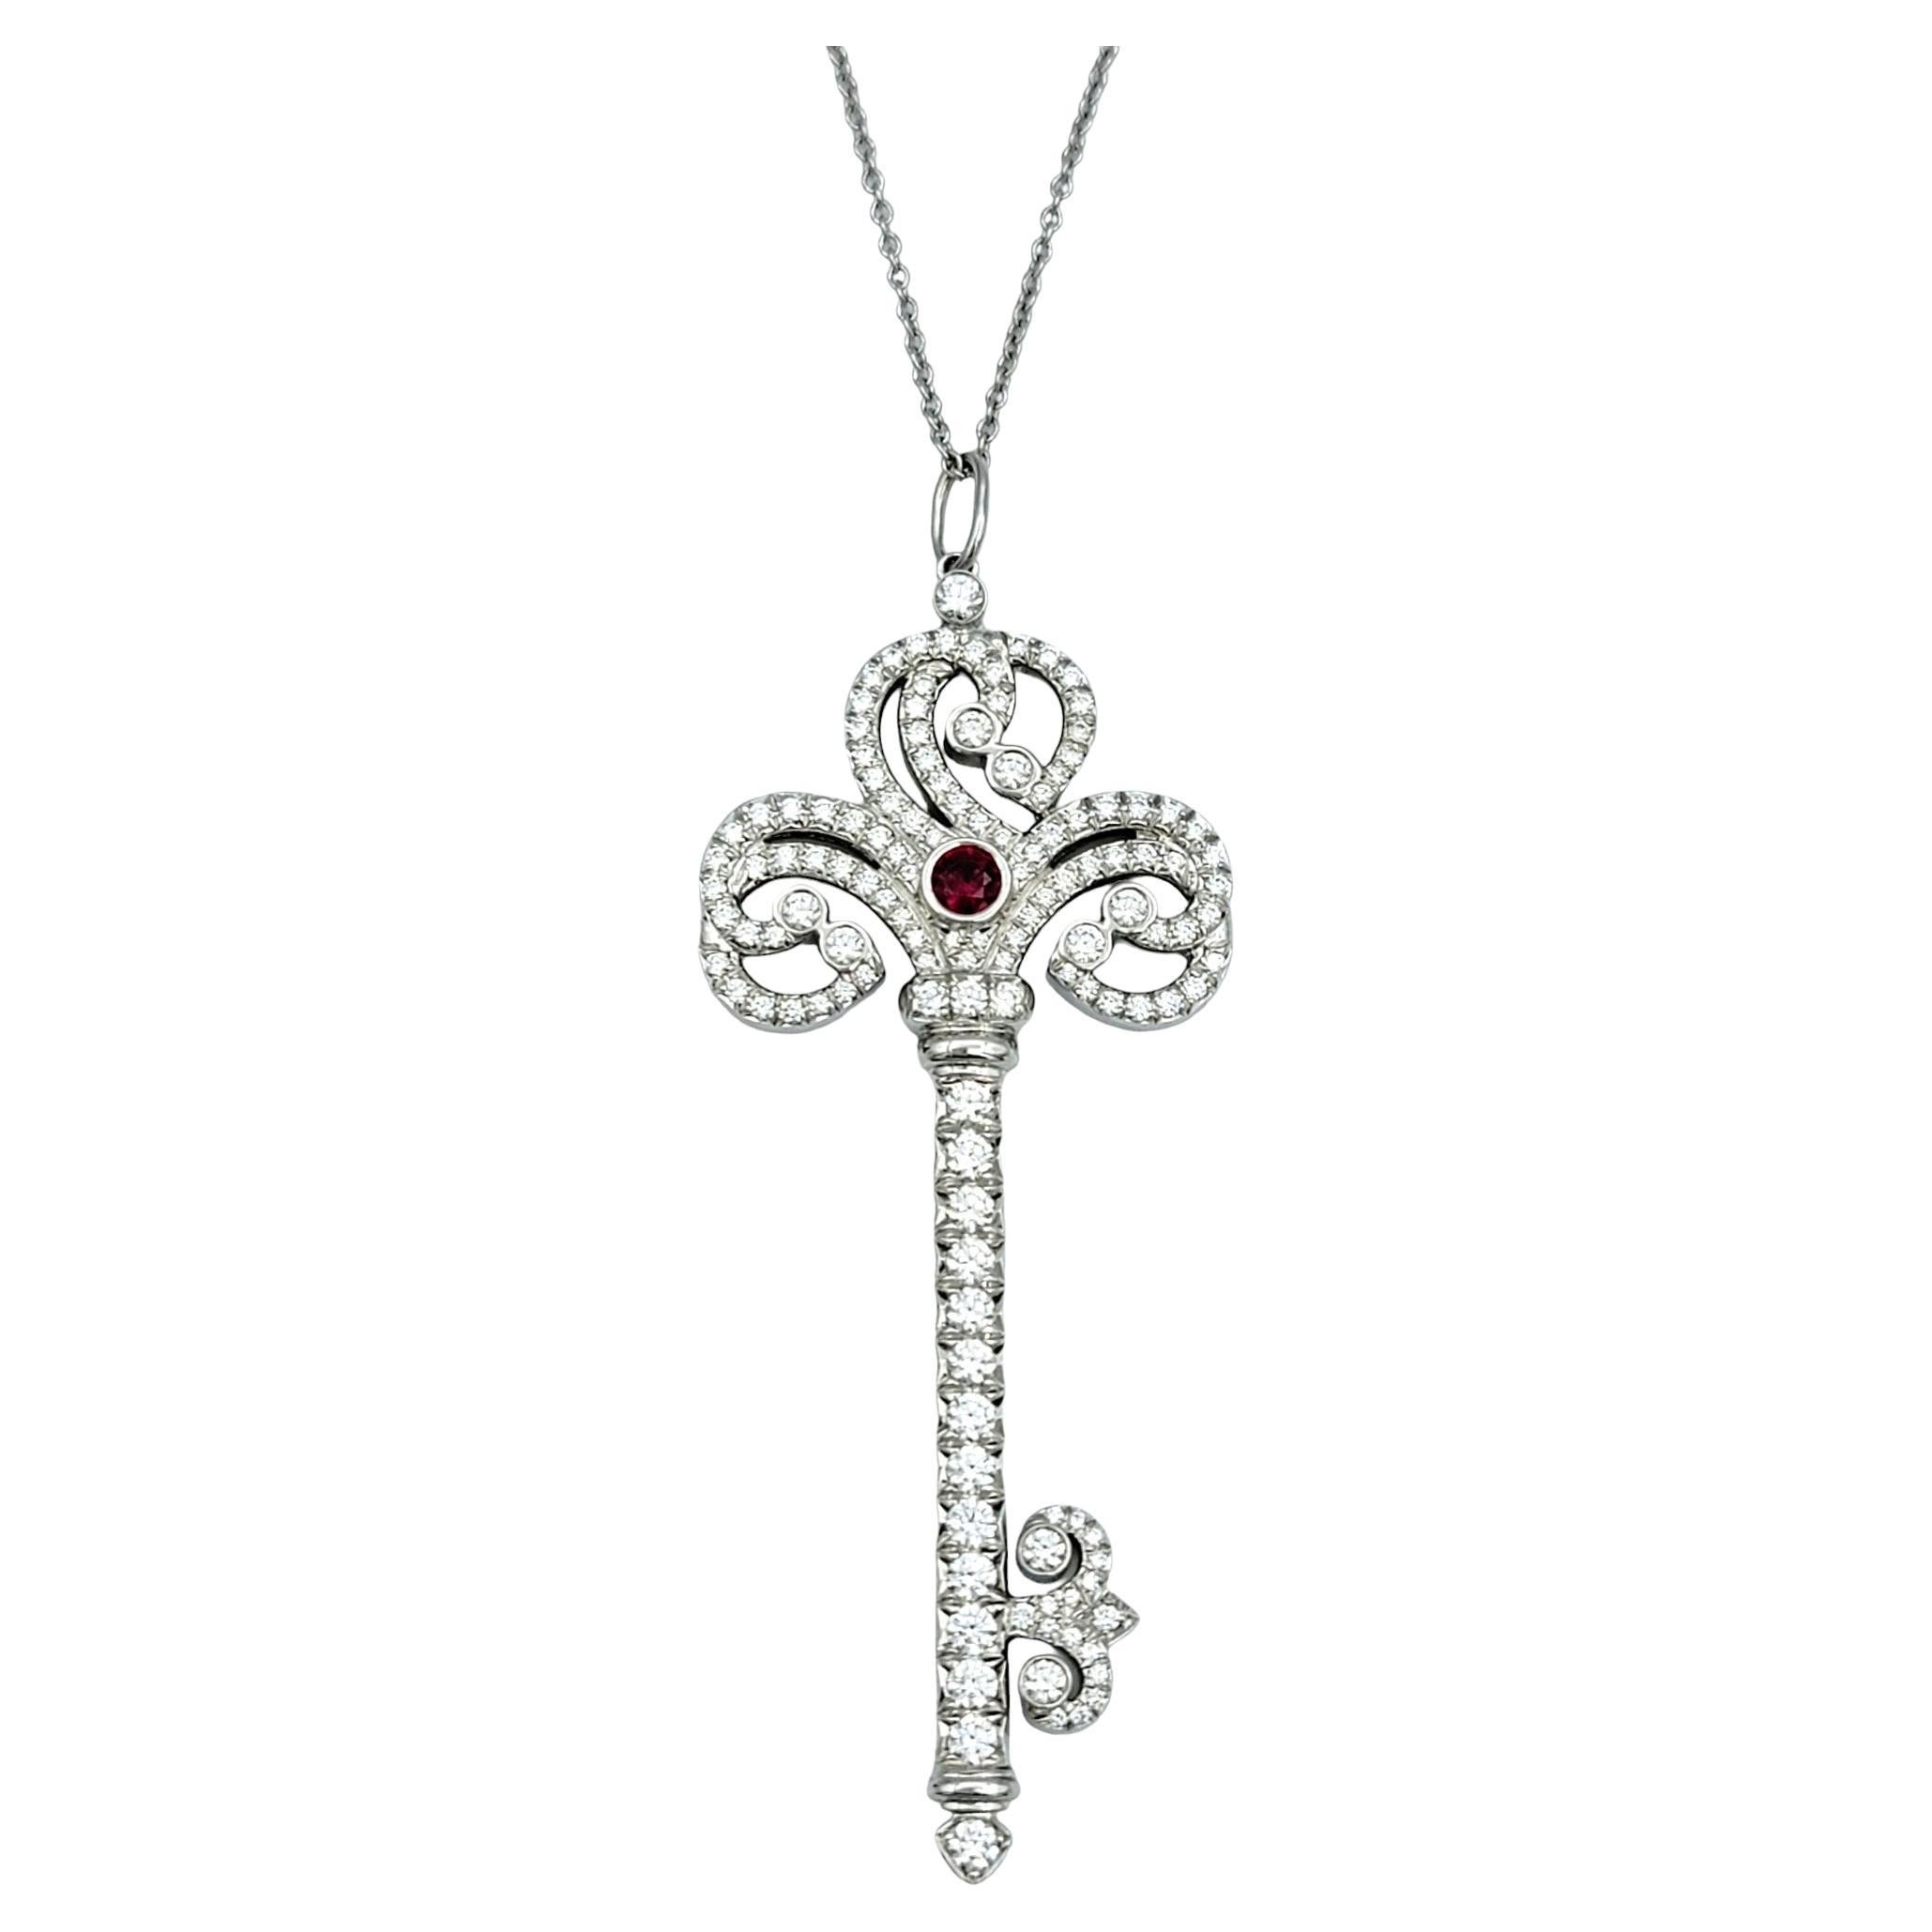 Tiffany & Co. Diamond and Ruby Large Key Pendant Necklace in Polished Platinum